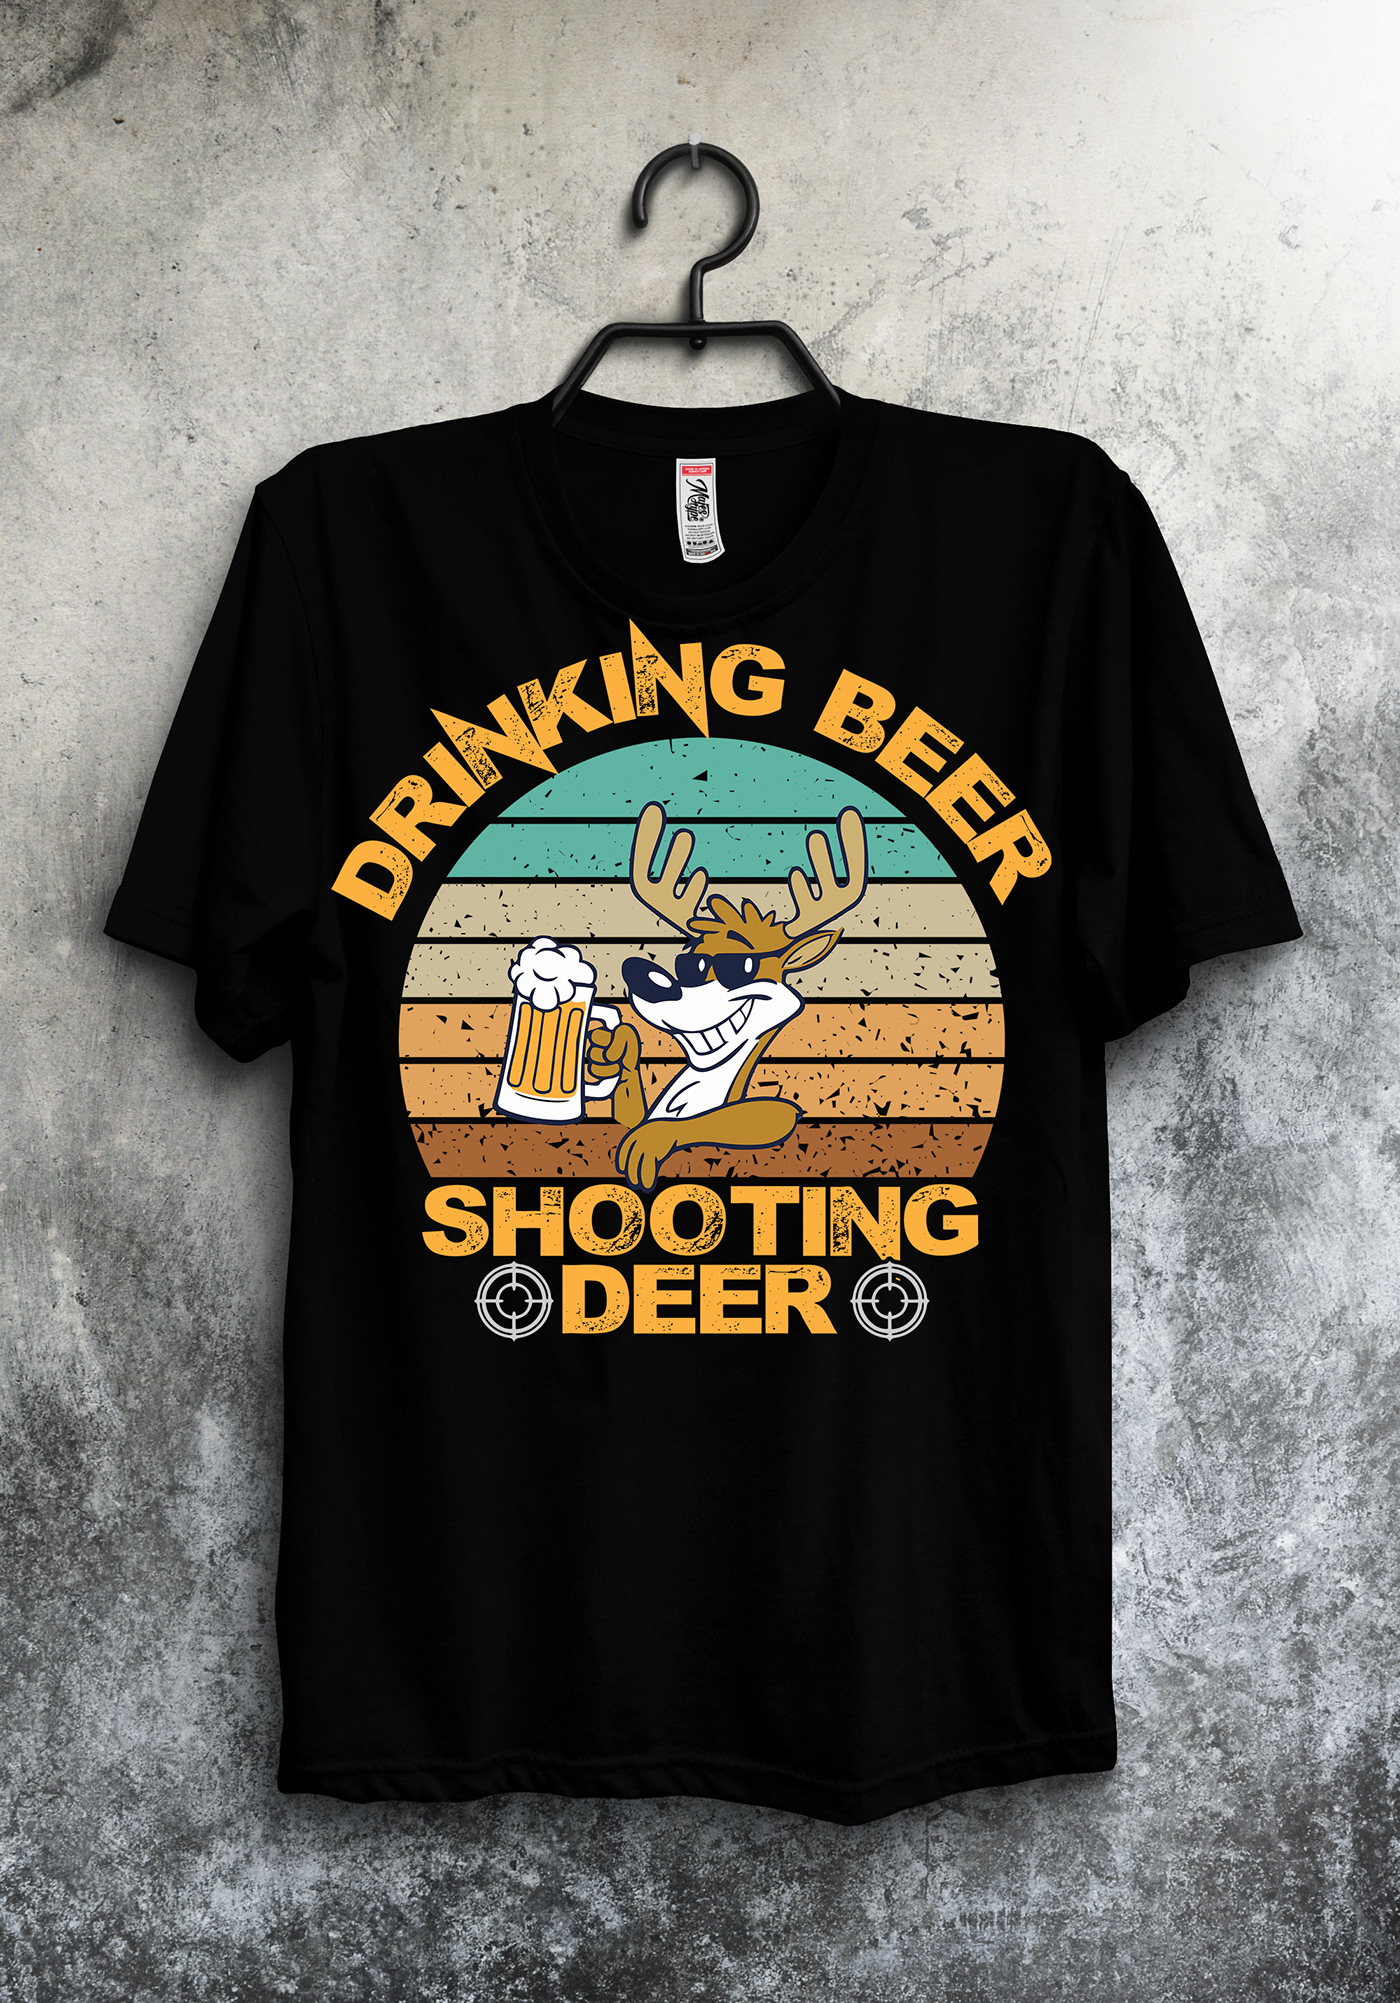 bow hunting t-shirts funny hunting t-shirts Hunting T-shirt Design hunting t-shirt designs